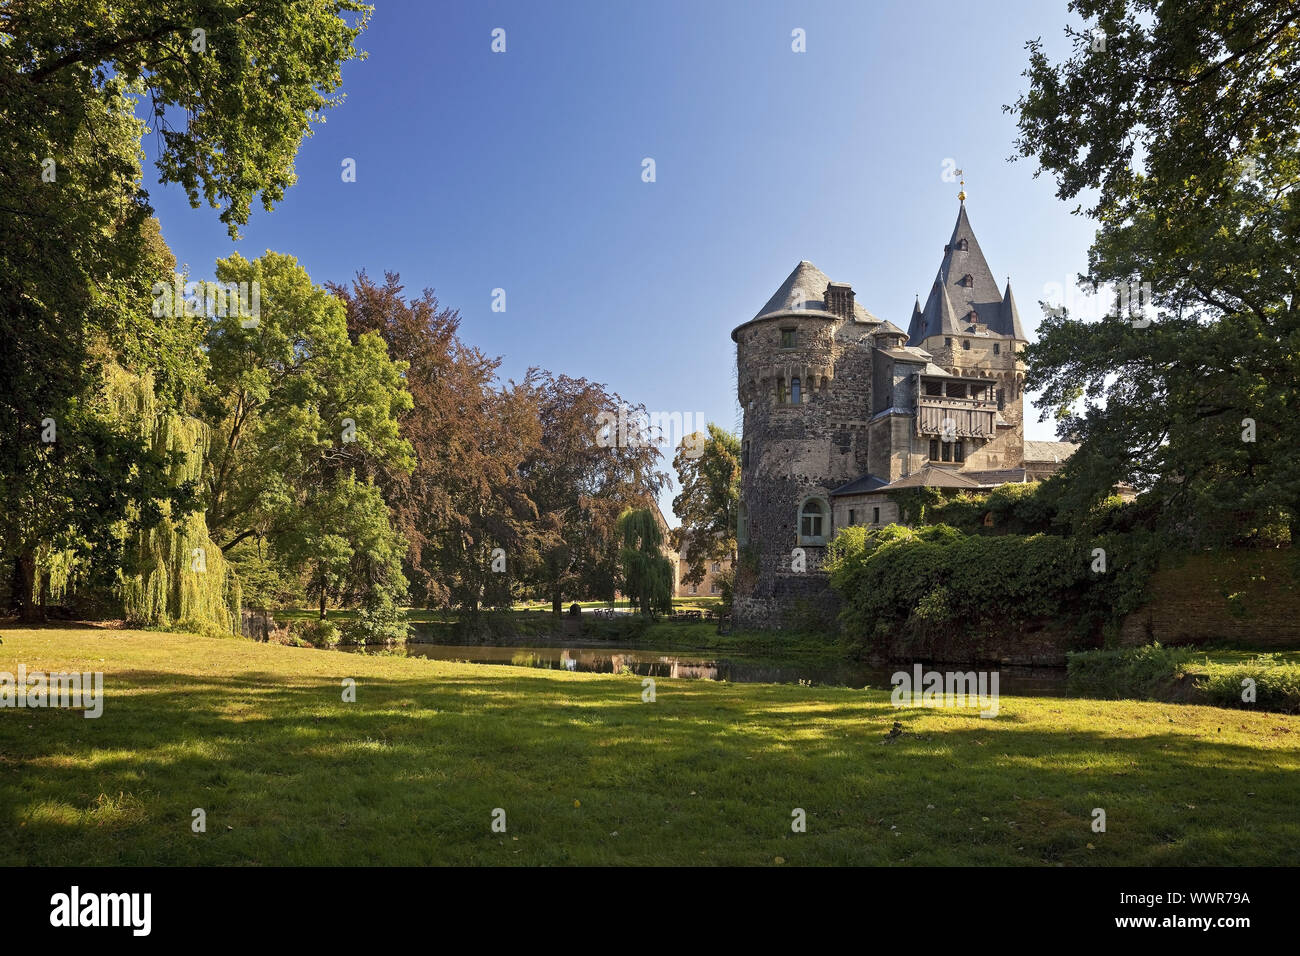 castle Huelchrath, Gevenbroich, Lower Rhine, North Rhine-Westphalia, Germany, Europe Stock Photo